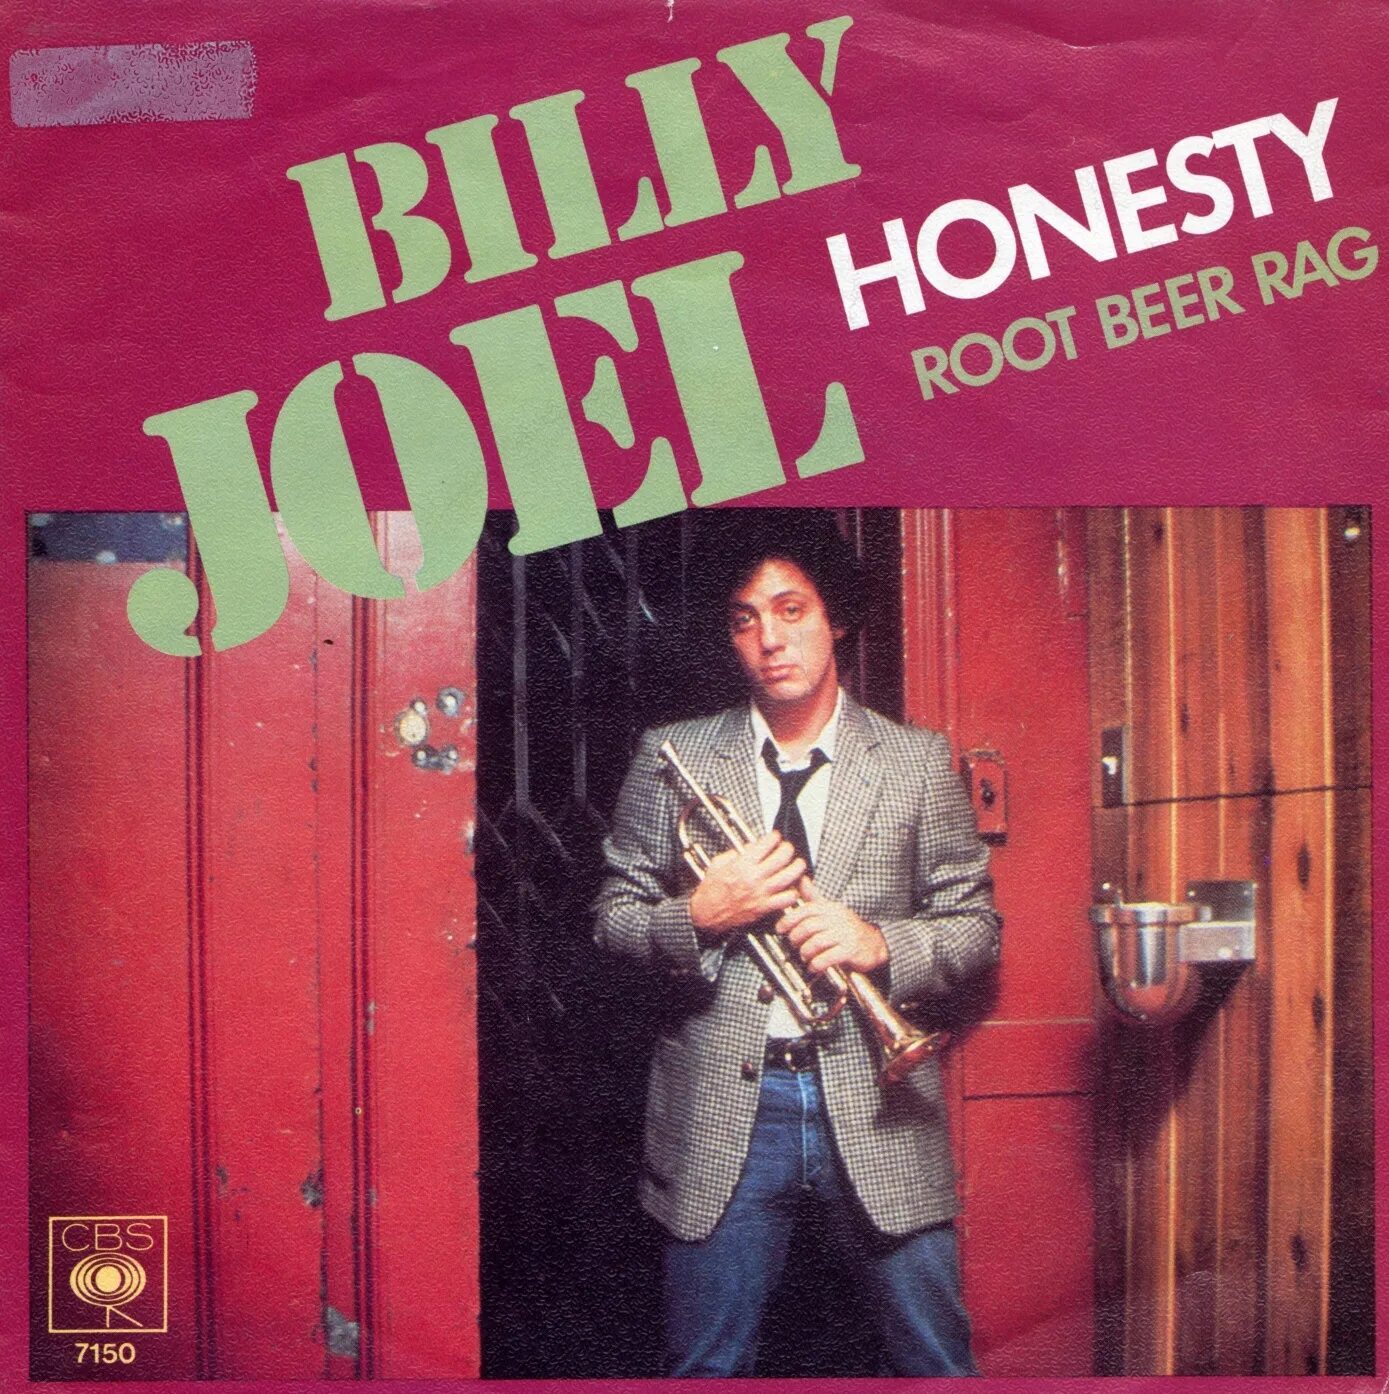 Billy joel honesty. Билли Джоэл Хонести. Billy Joel - honesty (1978). Billy Joel 1994. Billy Joel 52nd Street 1978.